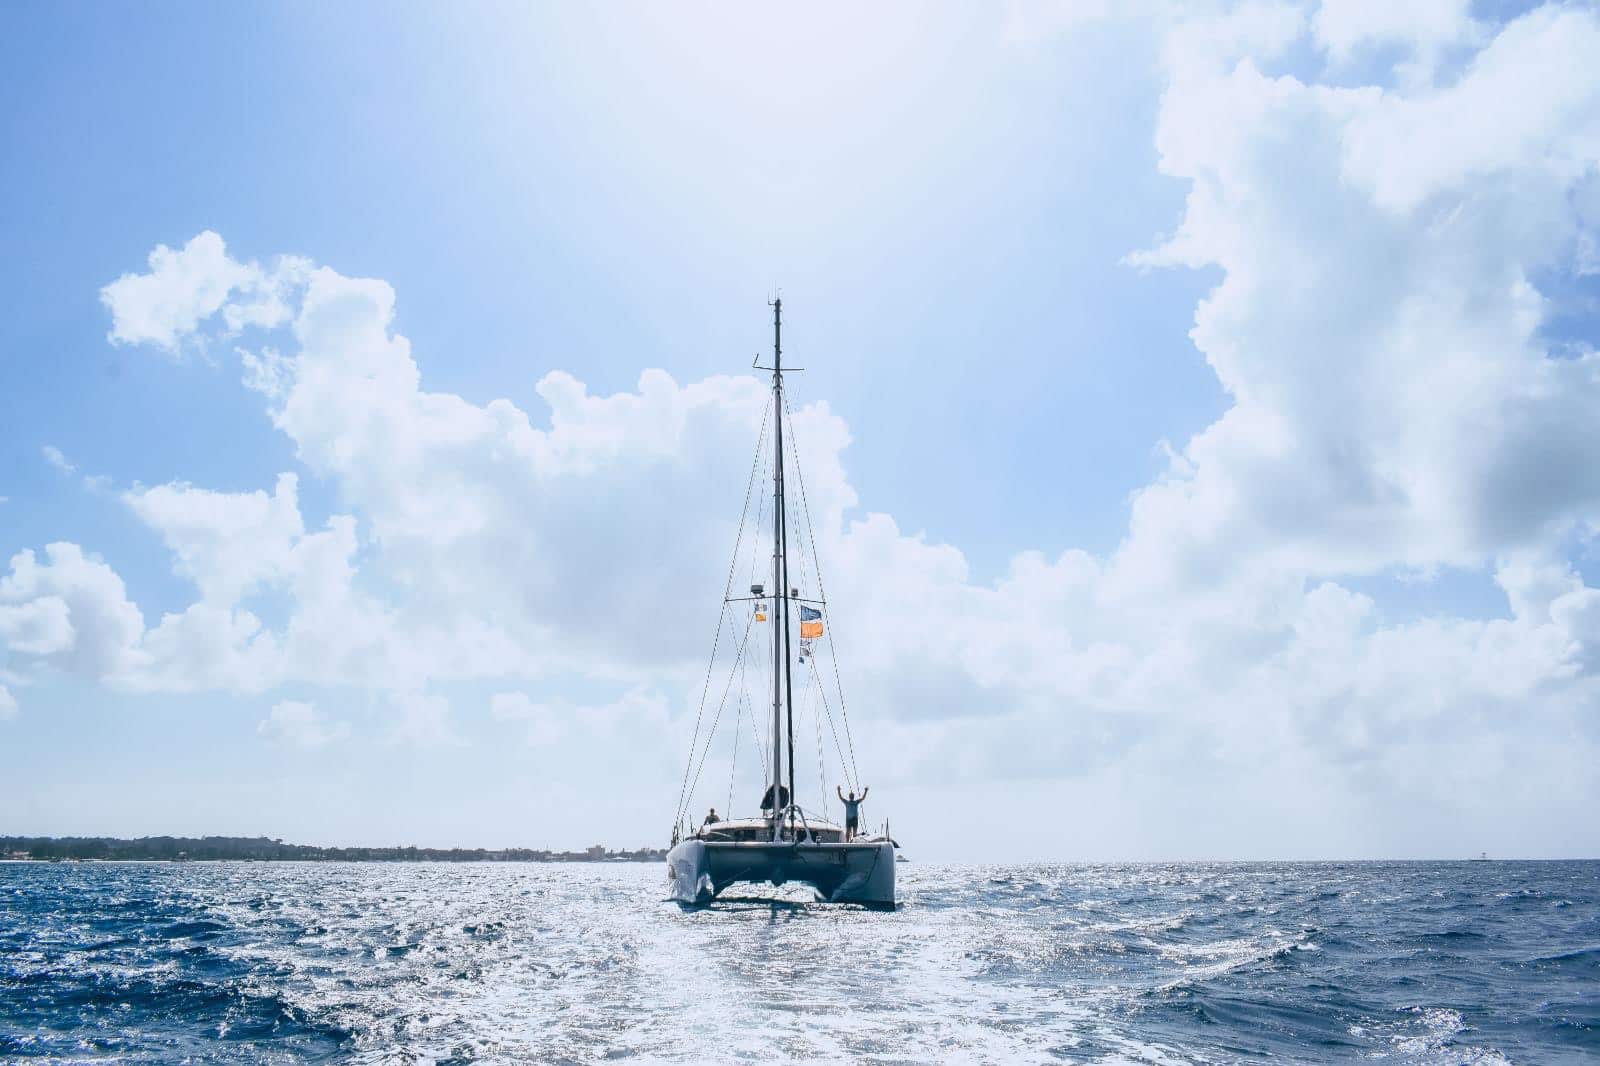 sailing around the world on a catamaran